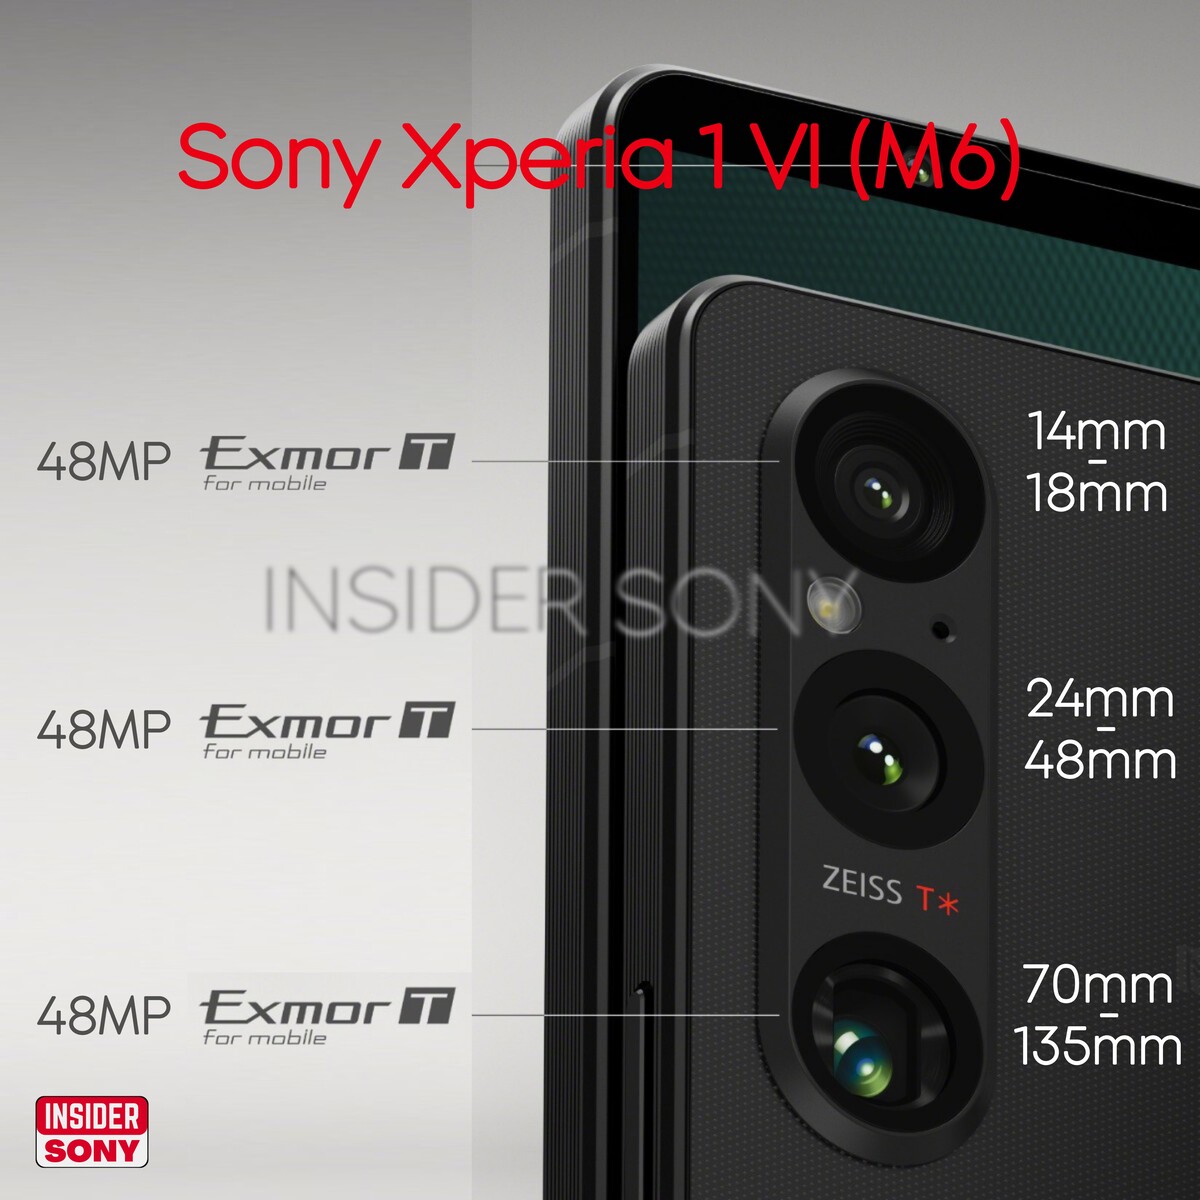 csm_Sony-Xperia-1-VI-rear-camera-details_31c6ae907f.jpg